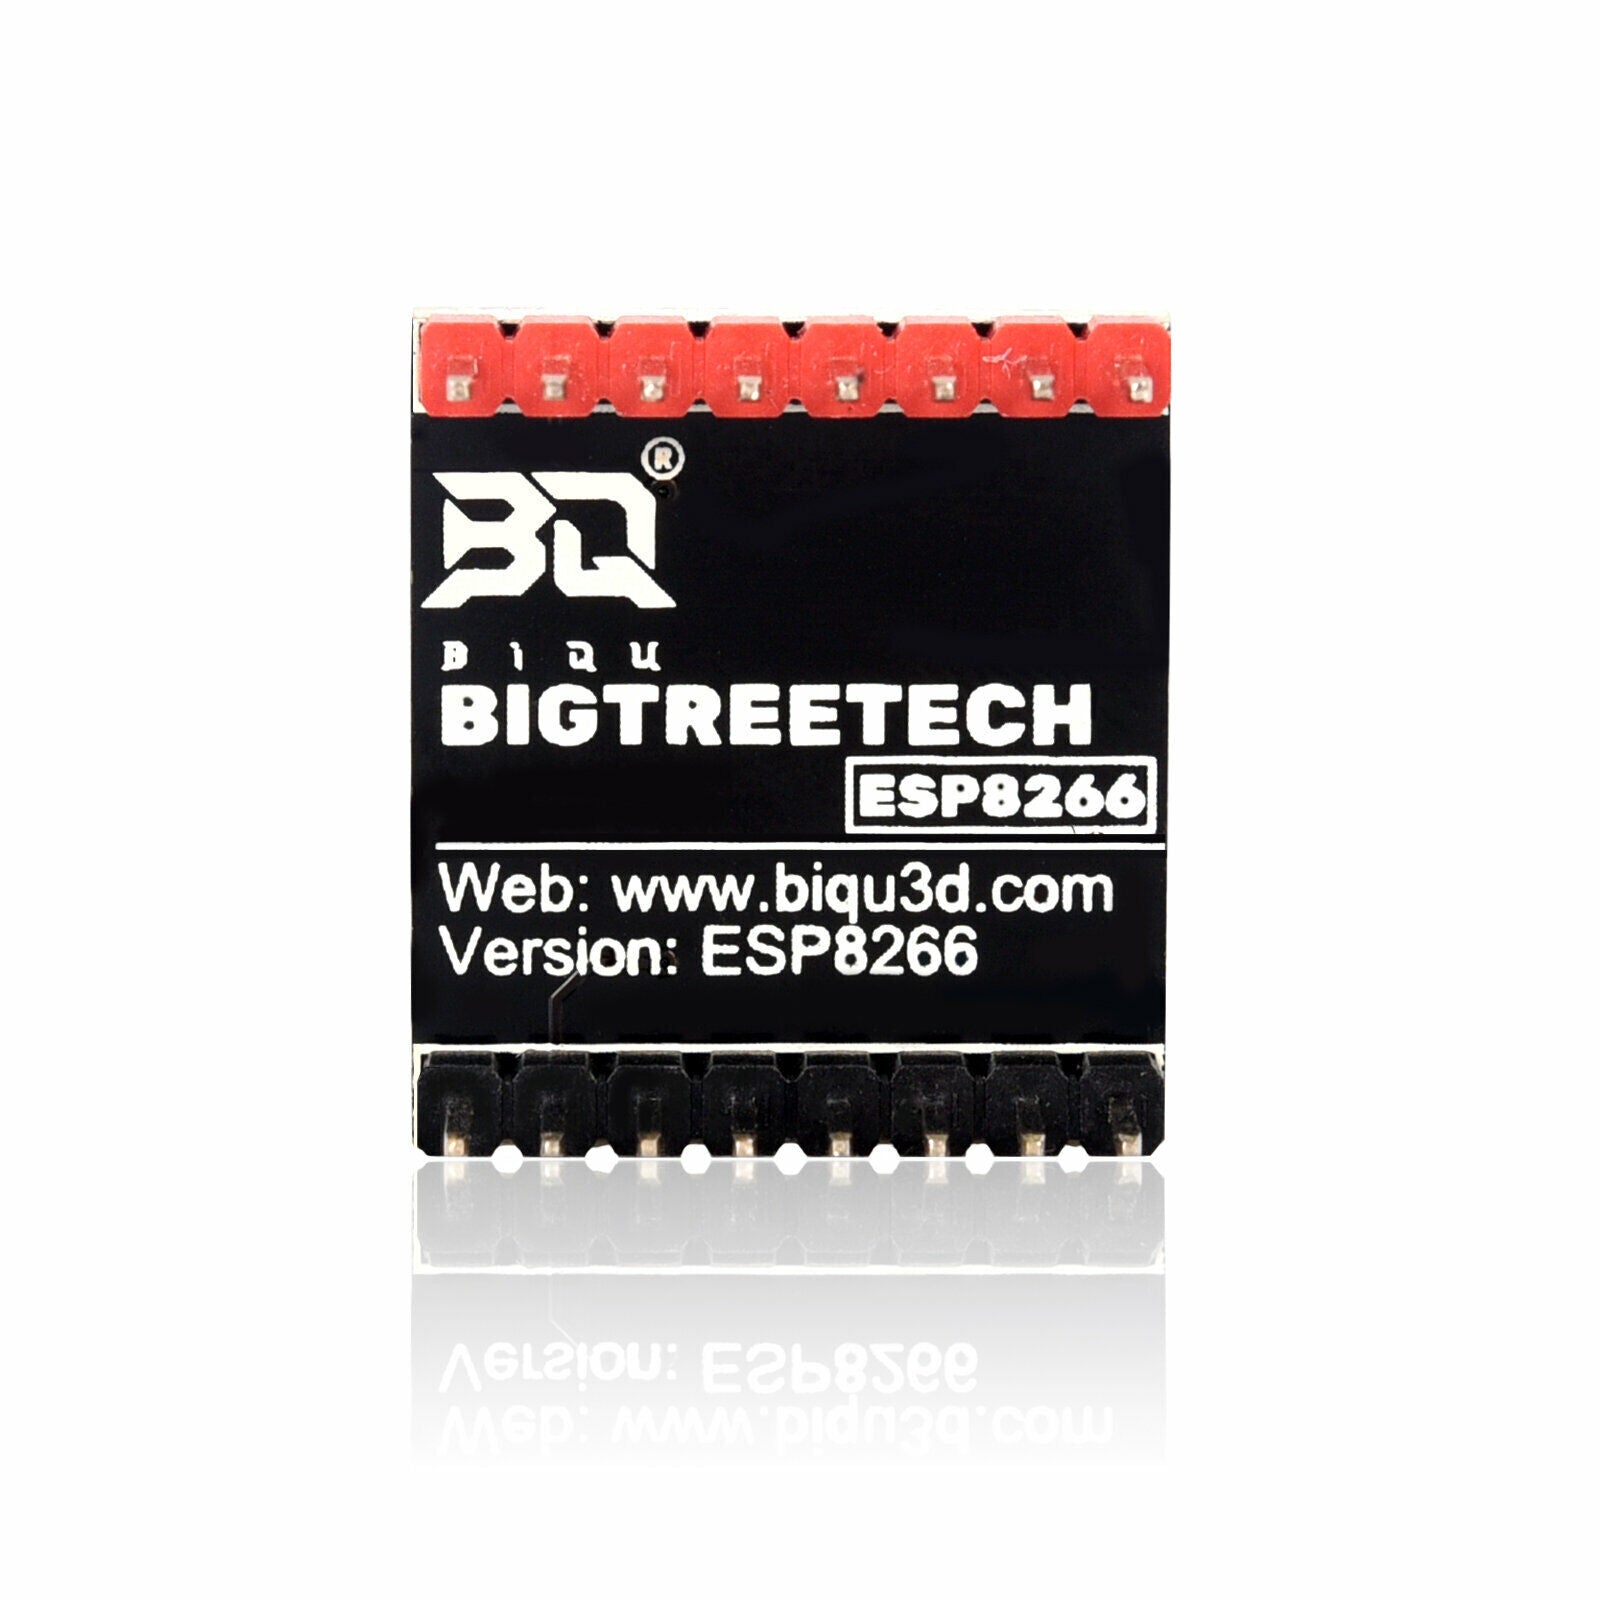 BIGTREETCH® BTT ESP-07S WiFi Module